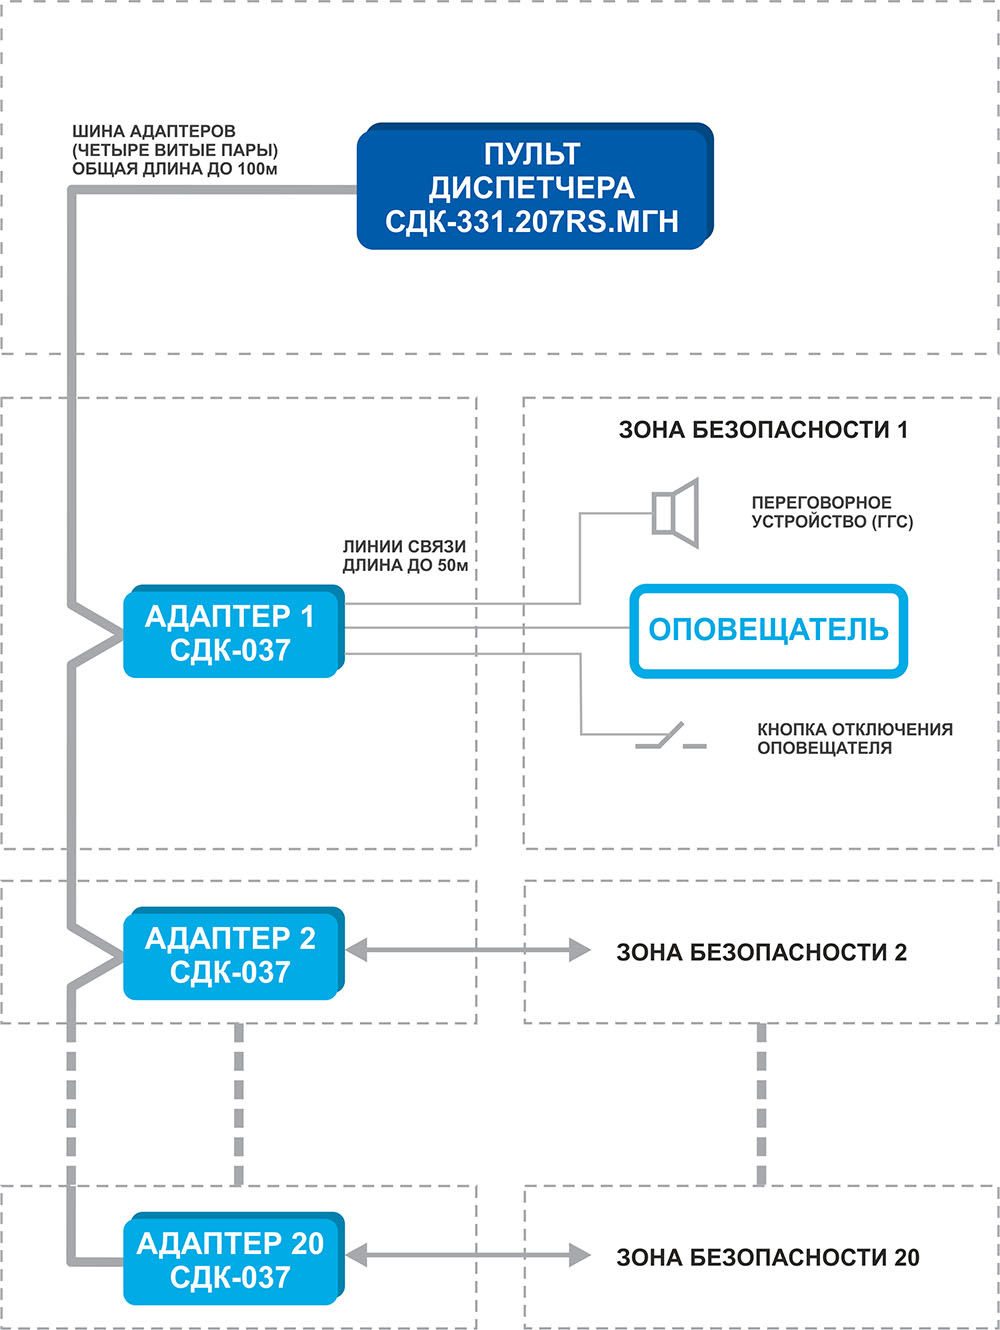 Структурная схема диспетчеризации зон безопасности МГН на базе пульта СДК-331.207RS.МГН.